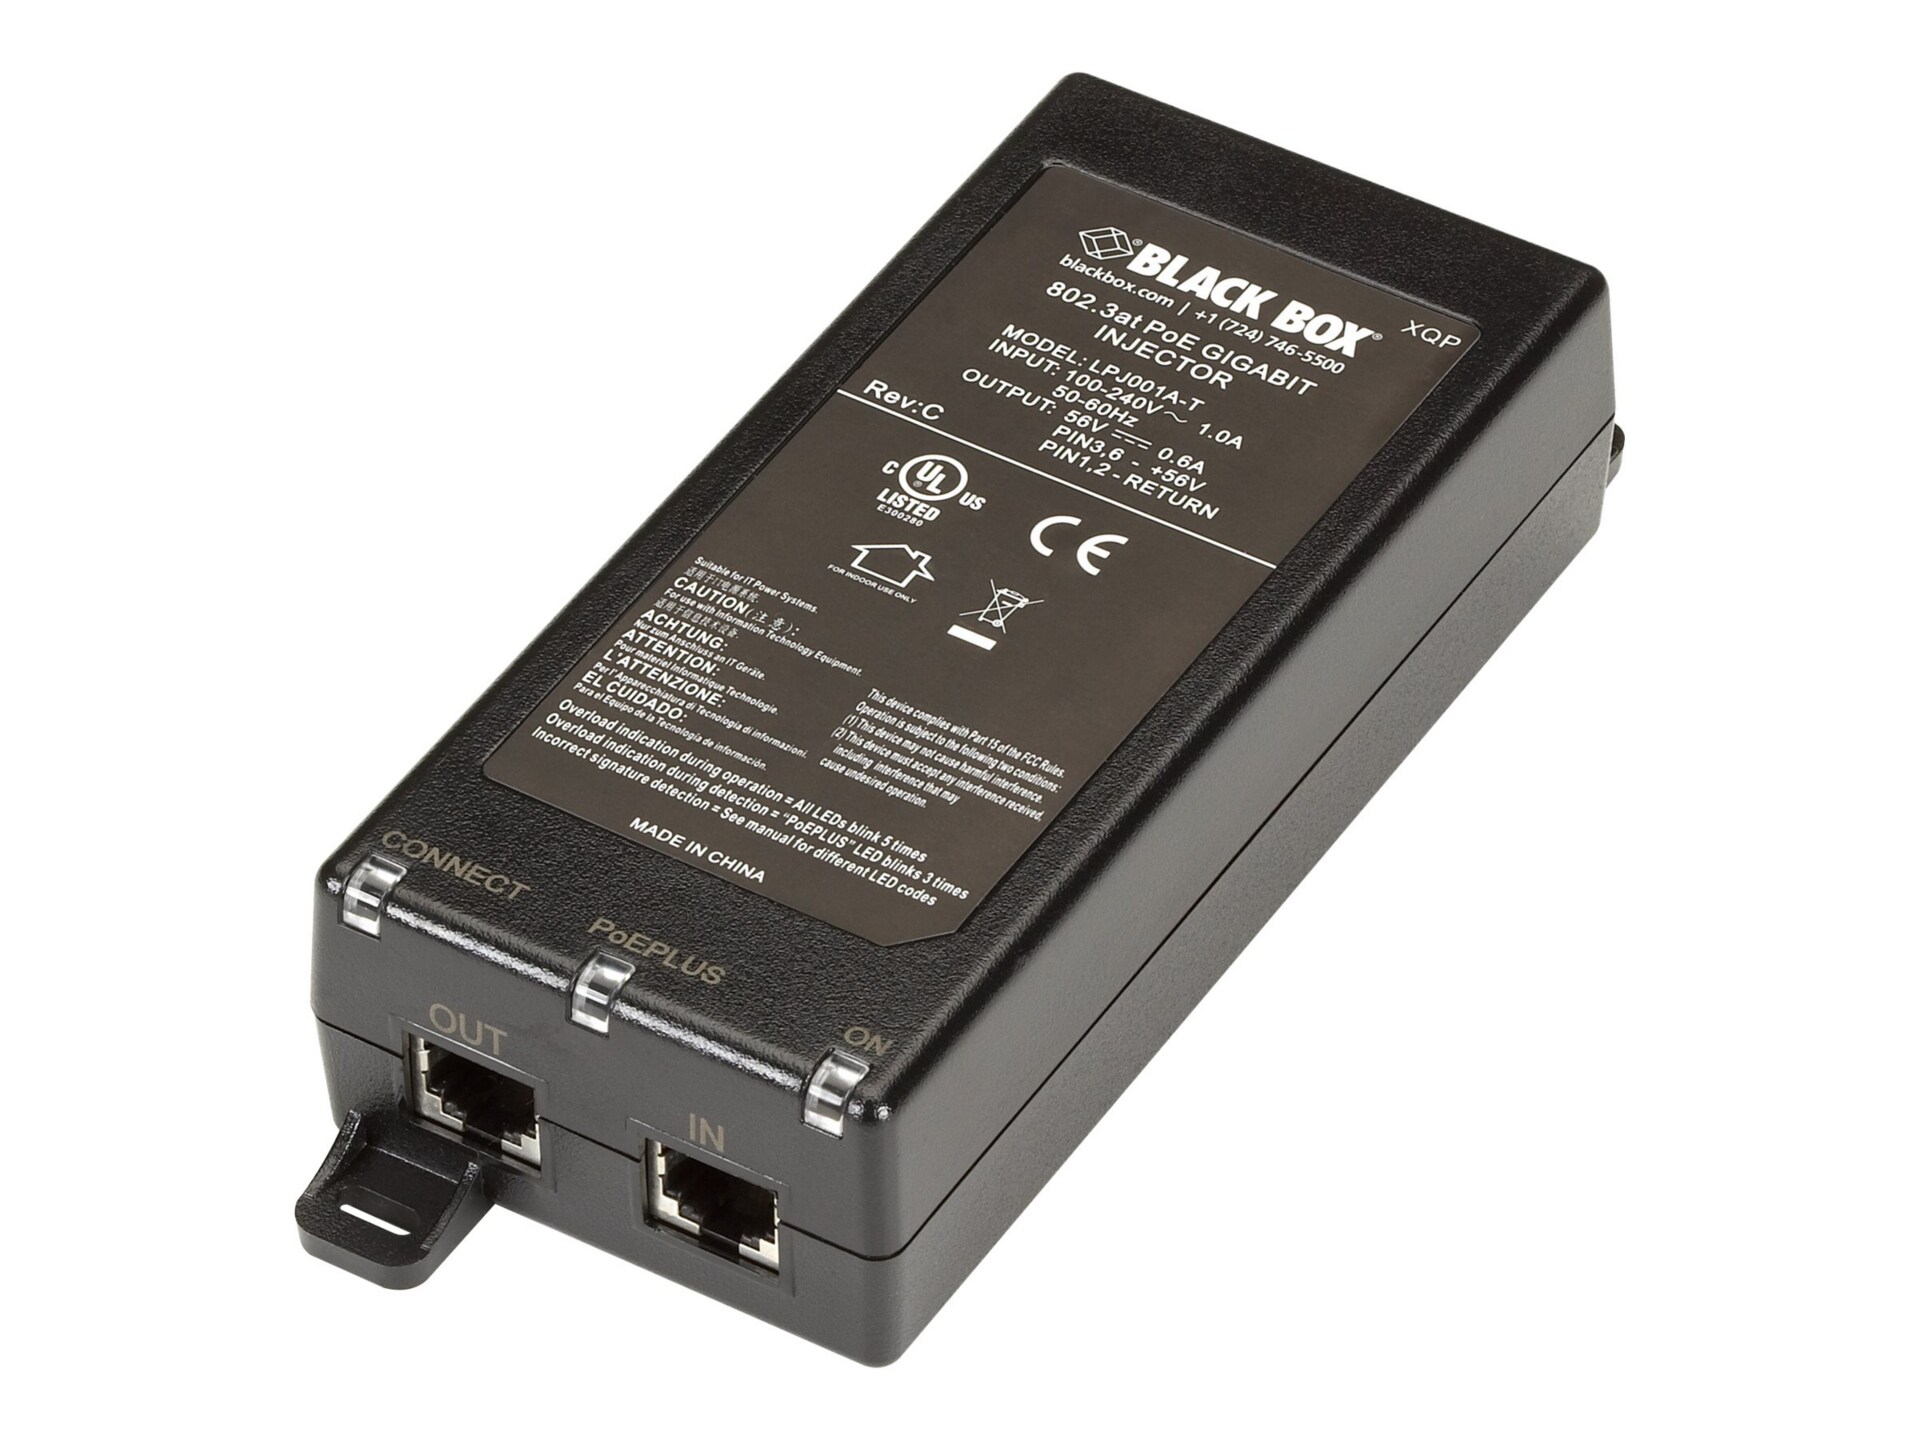 Black Box Power over Ethernet PoE Injector, 33.6 watt, 10/100/1000mbps